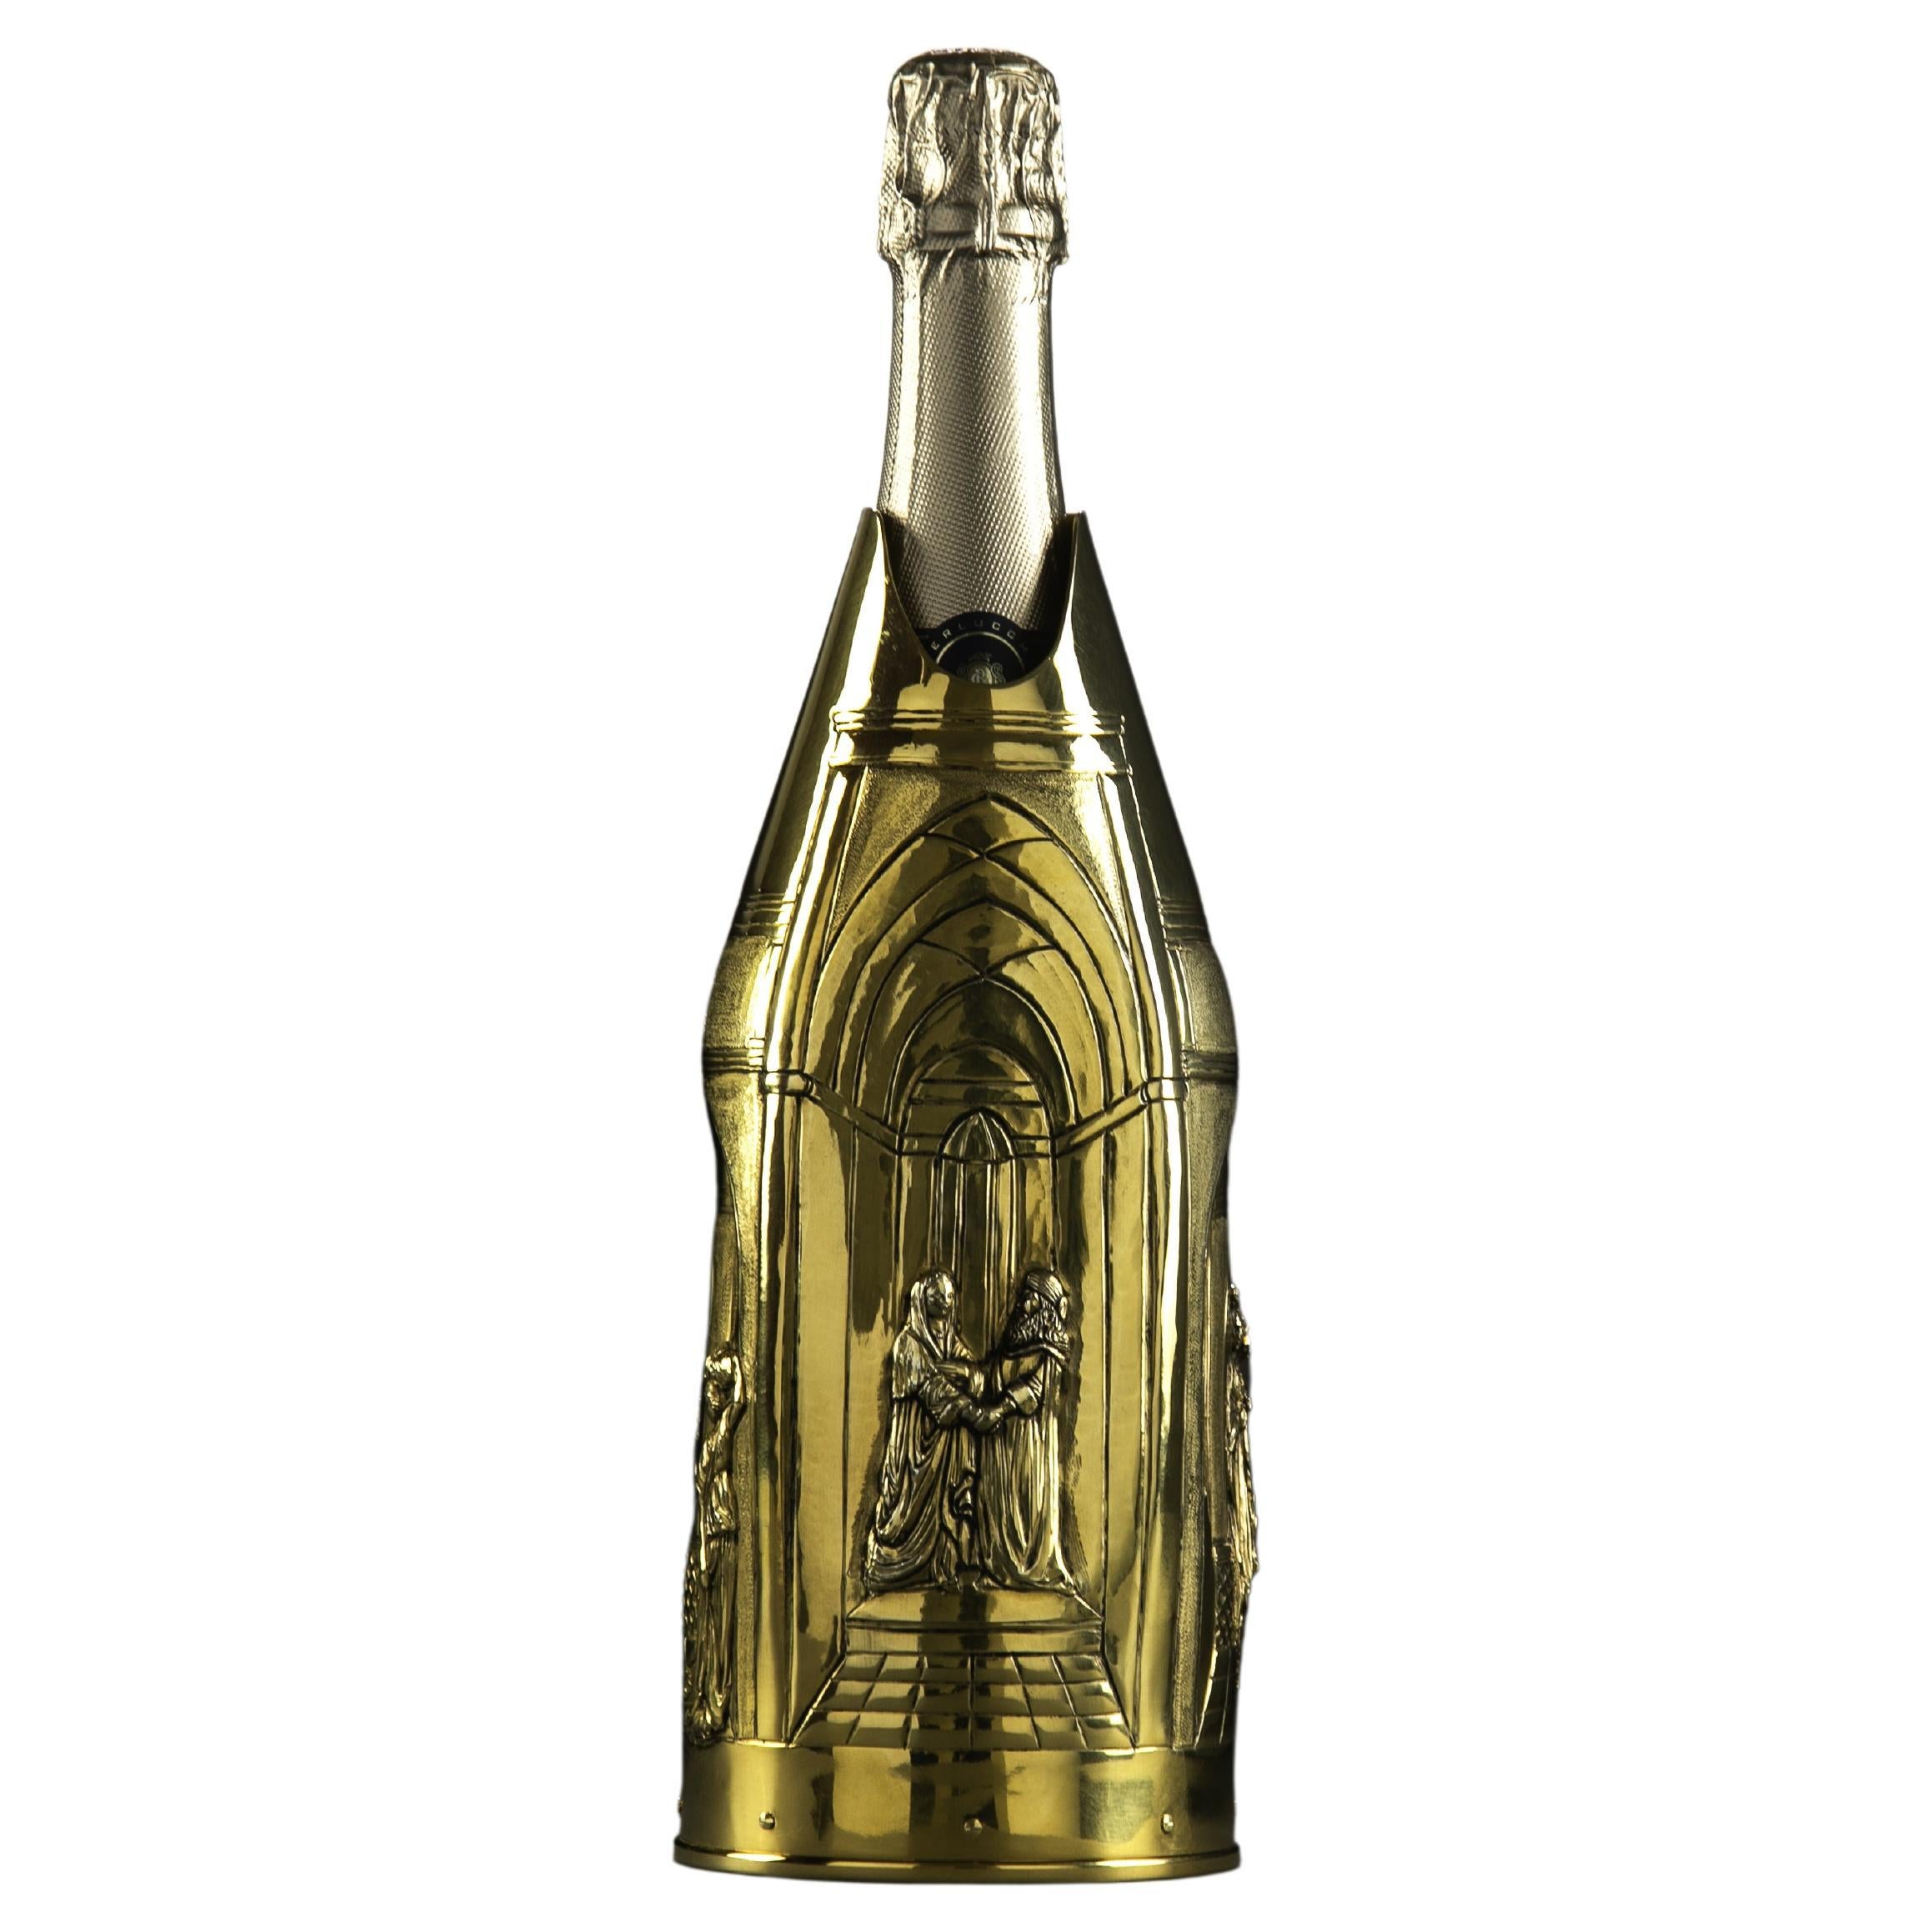 K-OVER Champagne, PORTE DEL PARADISO, argent 999/°, Italie